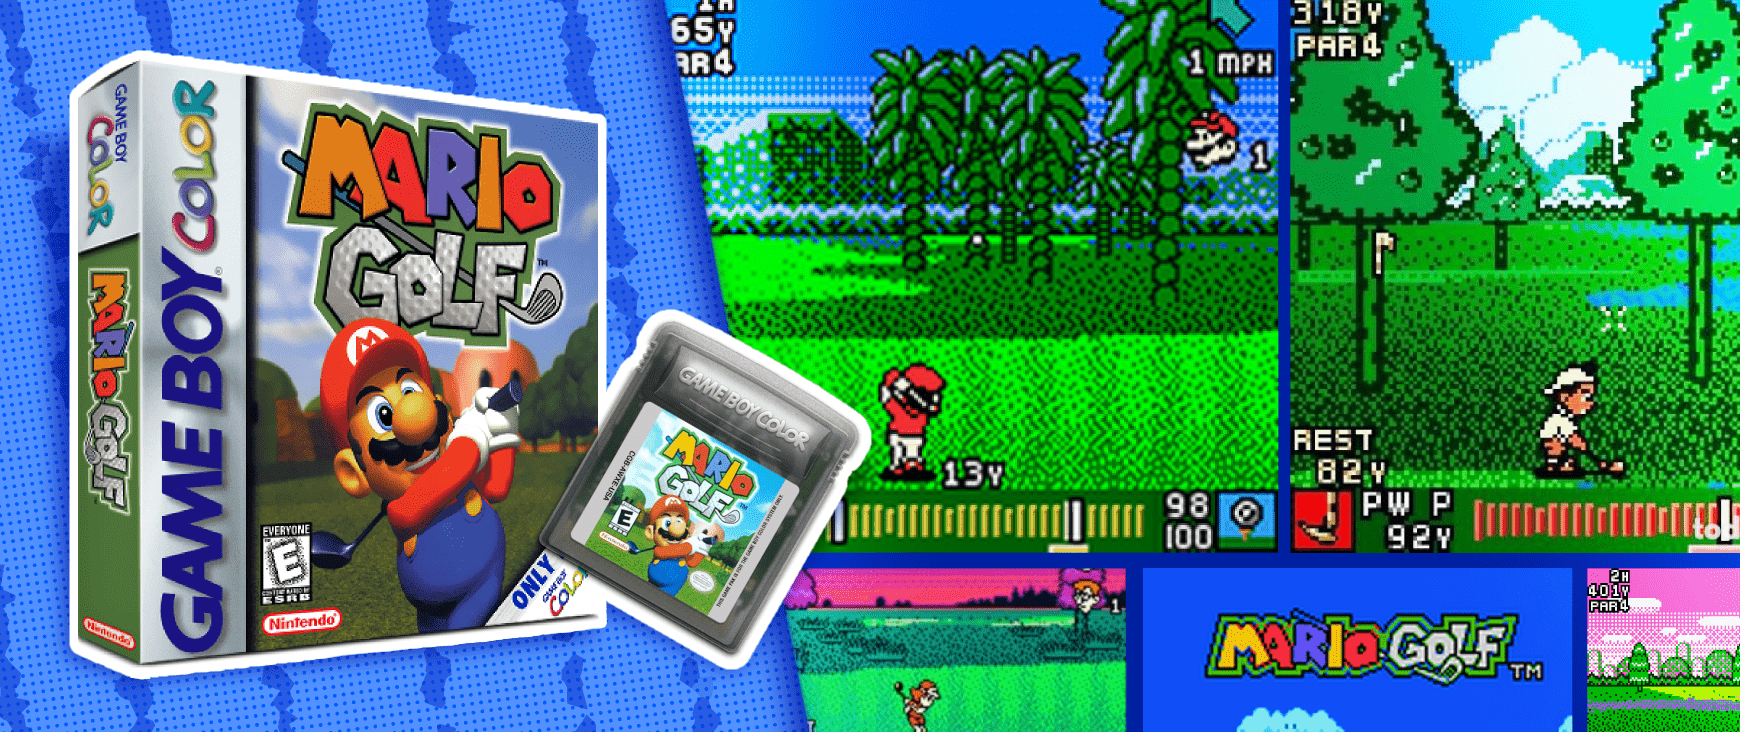 Mario Golf on Game Boy Color